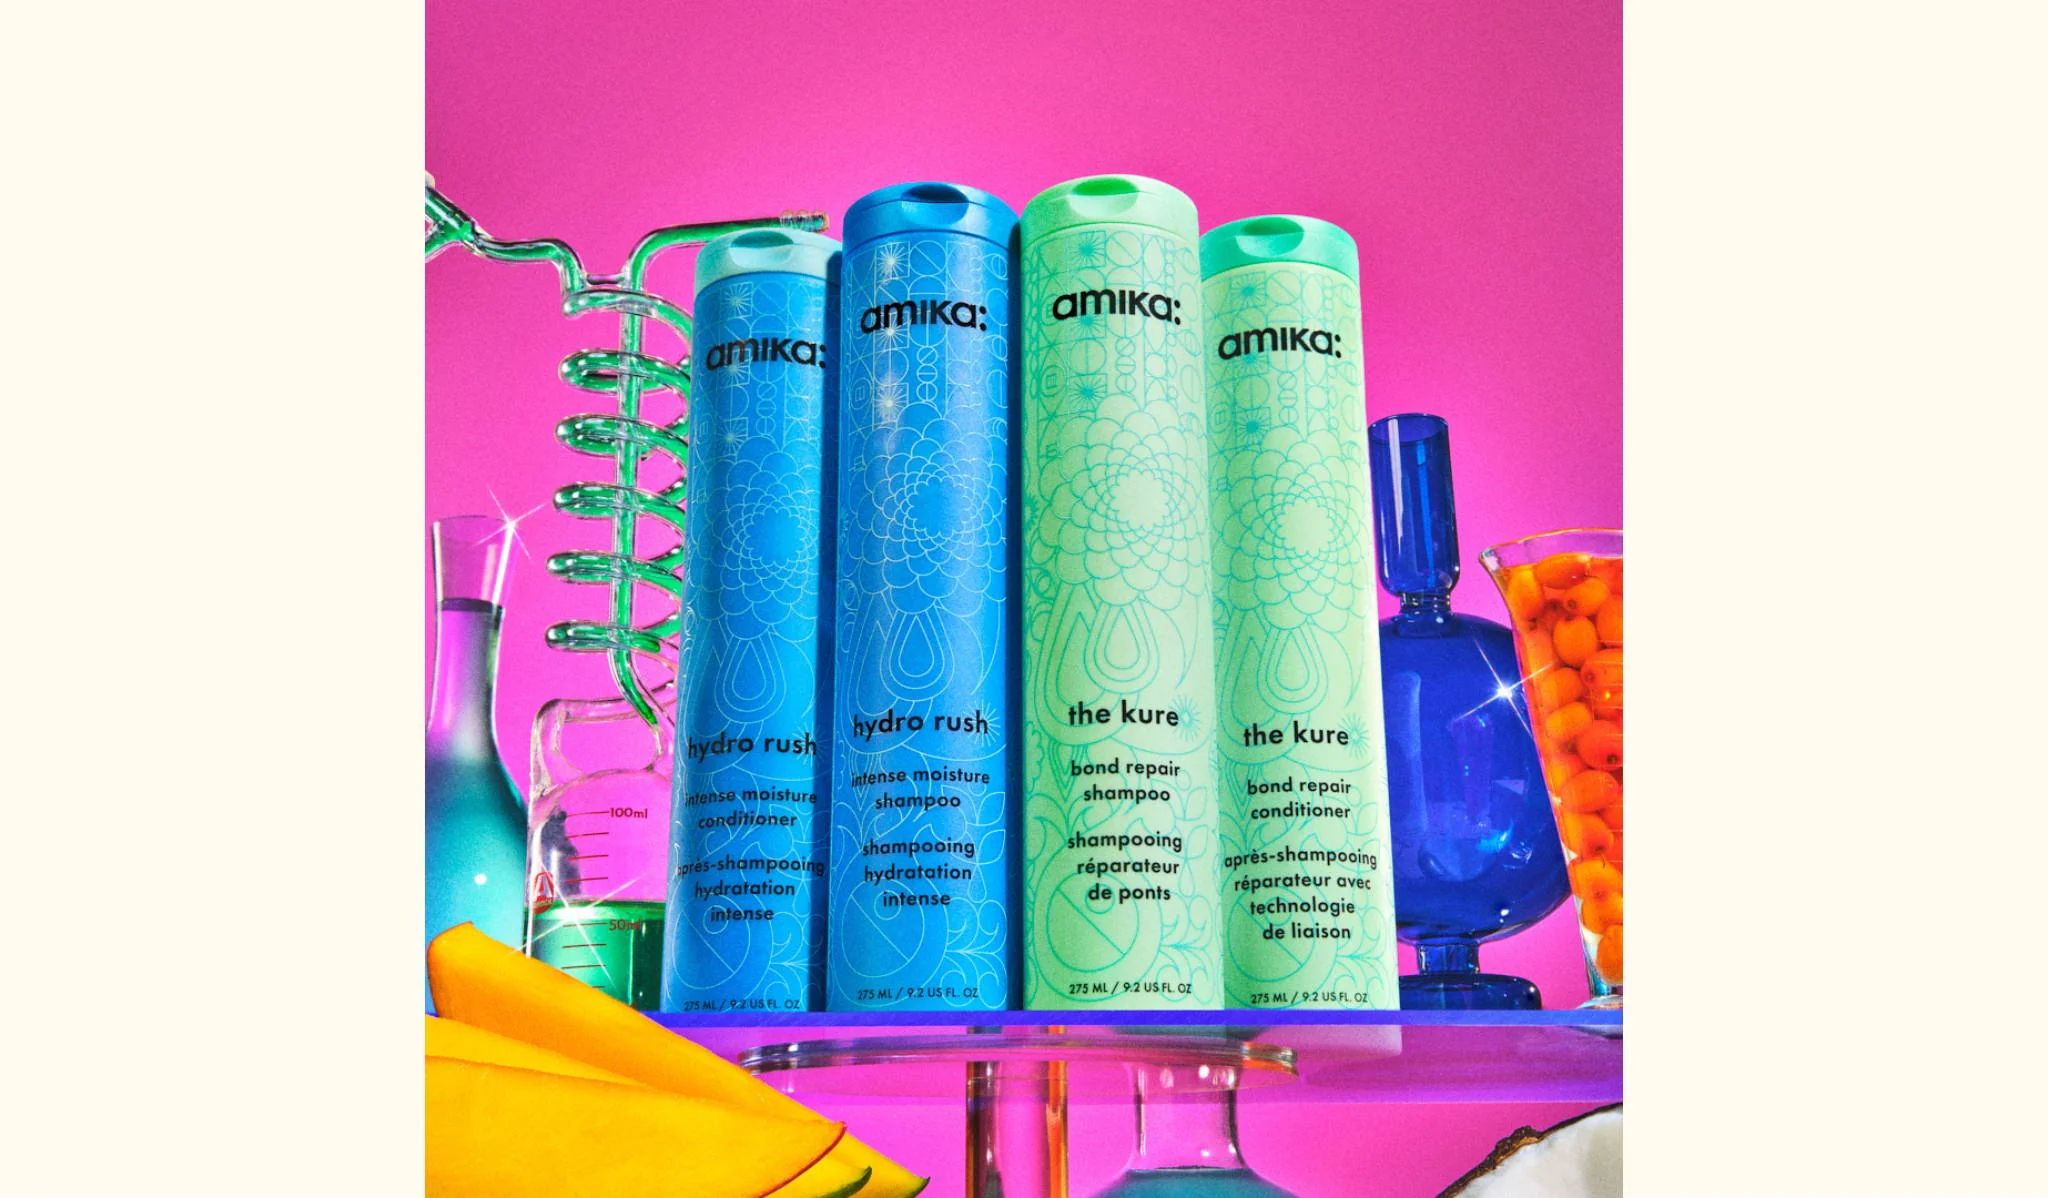 hydro rush intense moisture shampoo and conditioner and the kure bond repair shampoo and conditioner